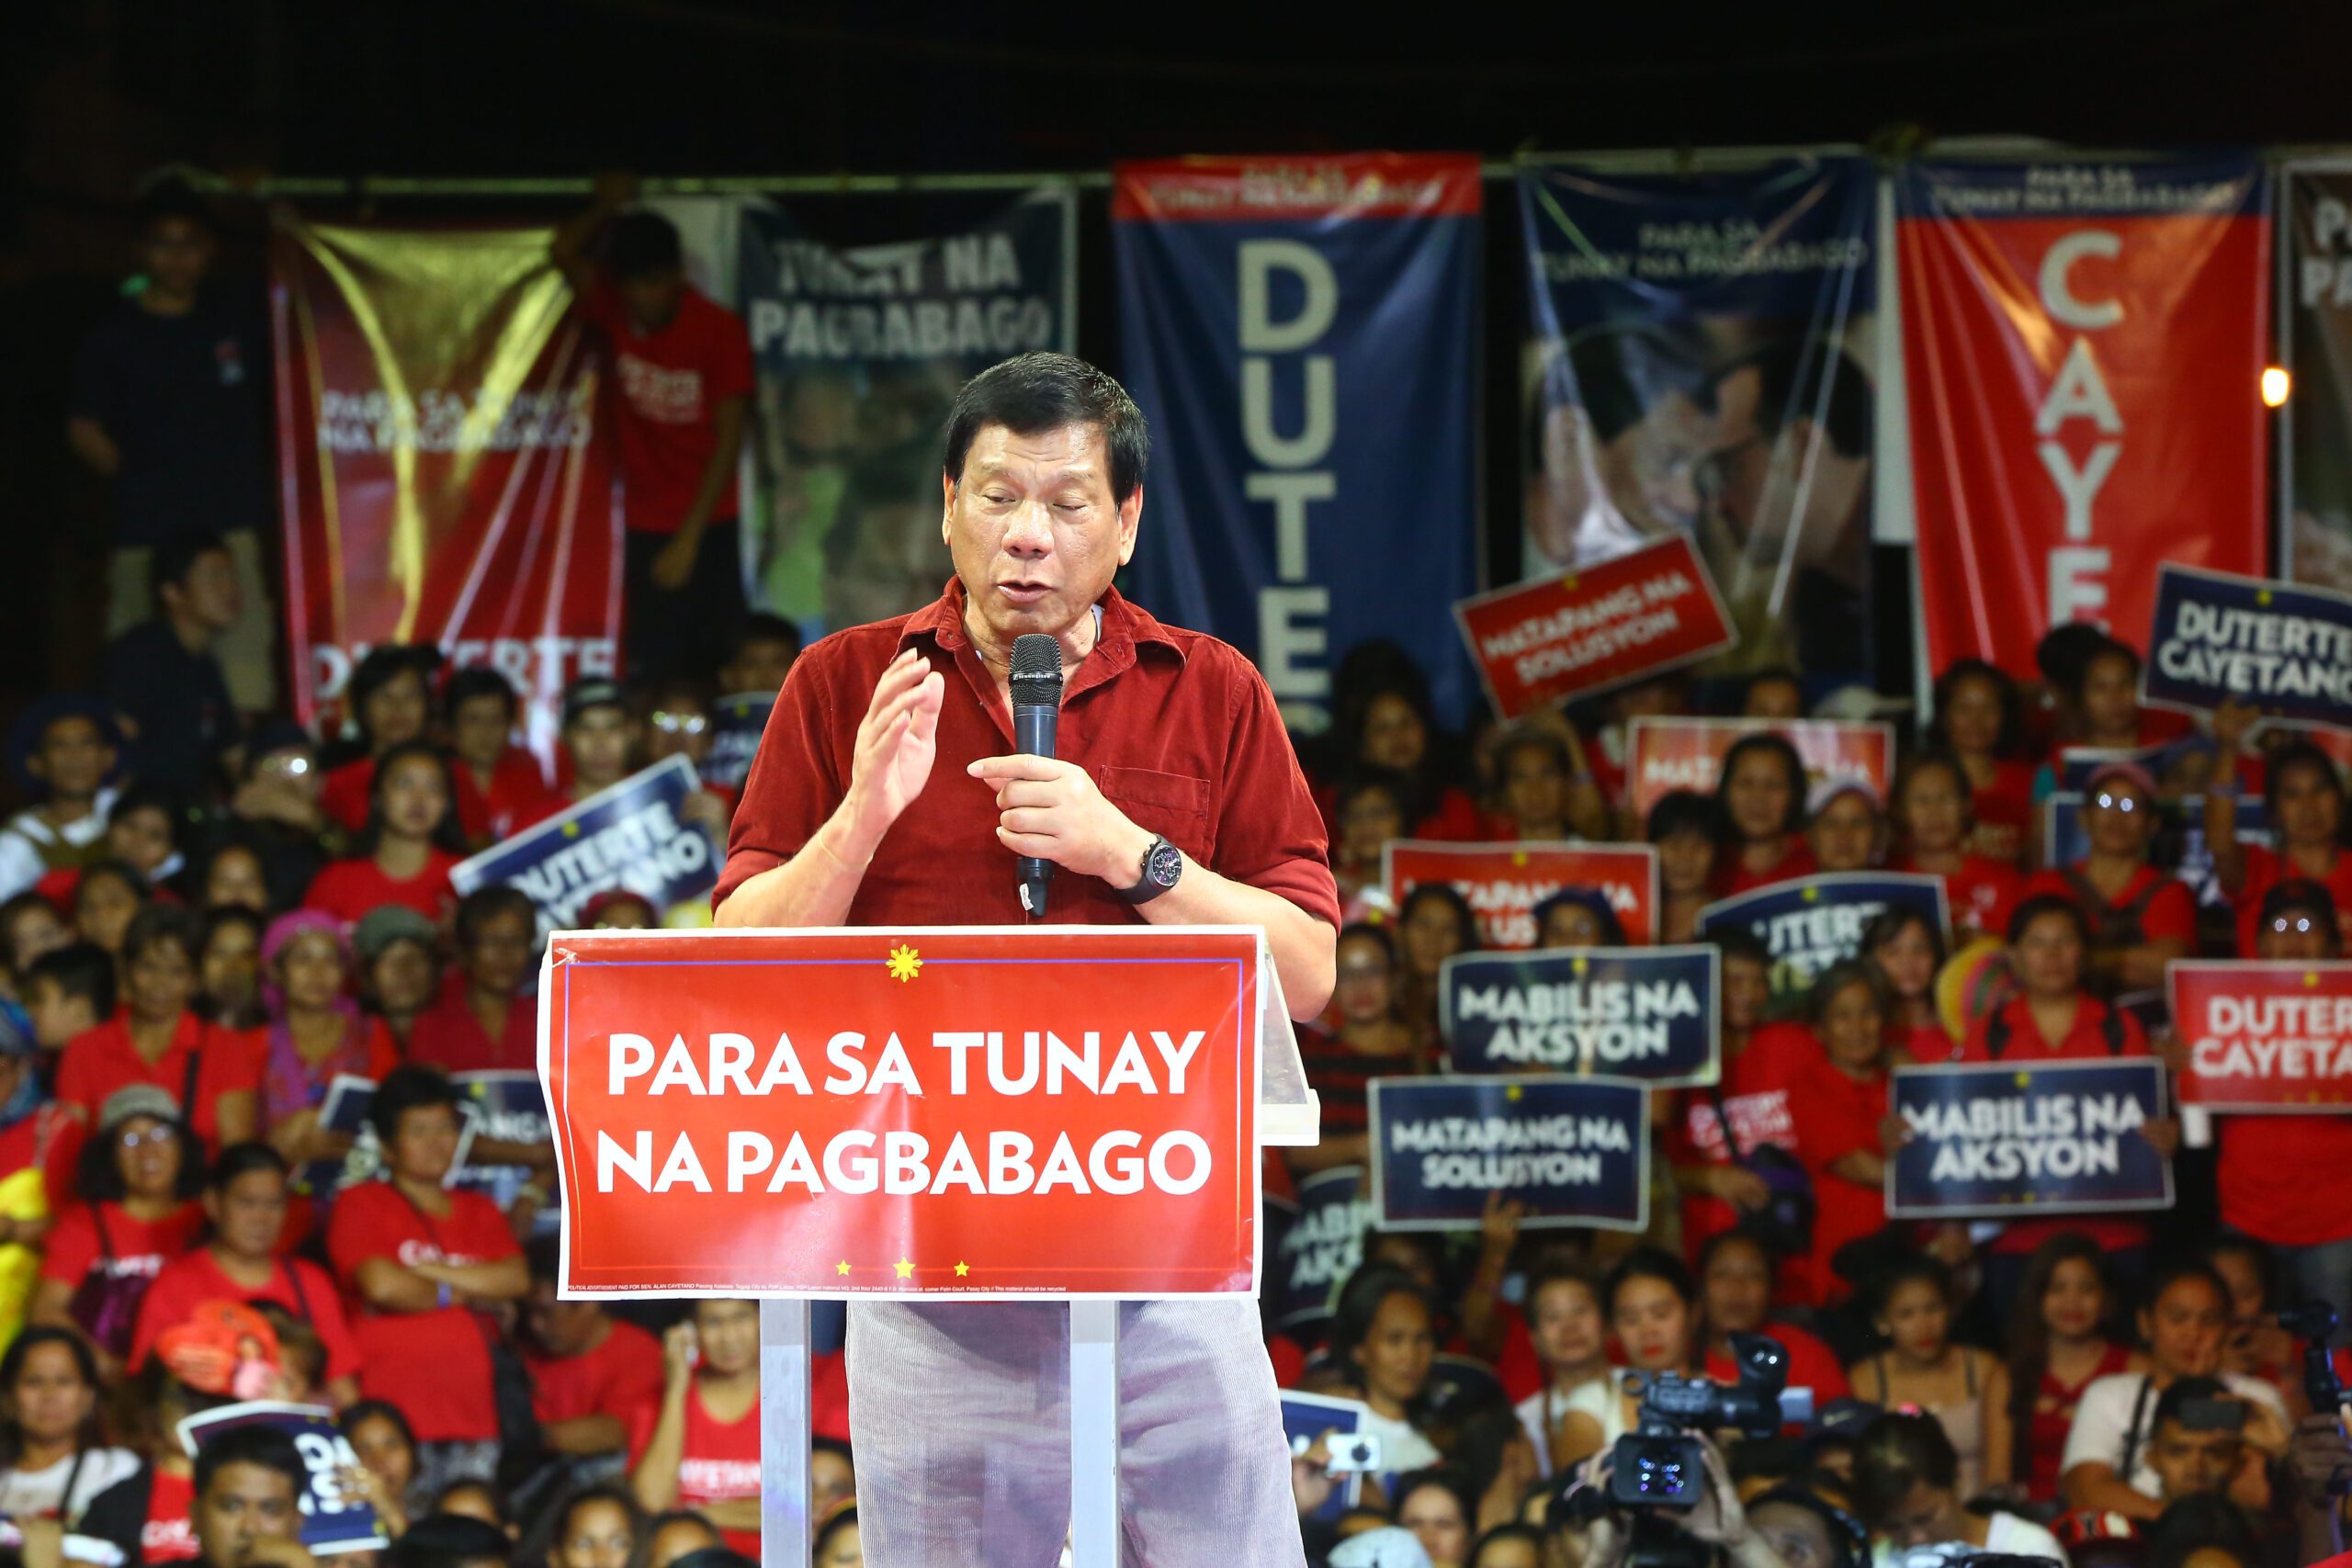 Duterte: Subic was better venue for APEC summit